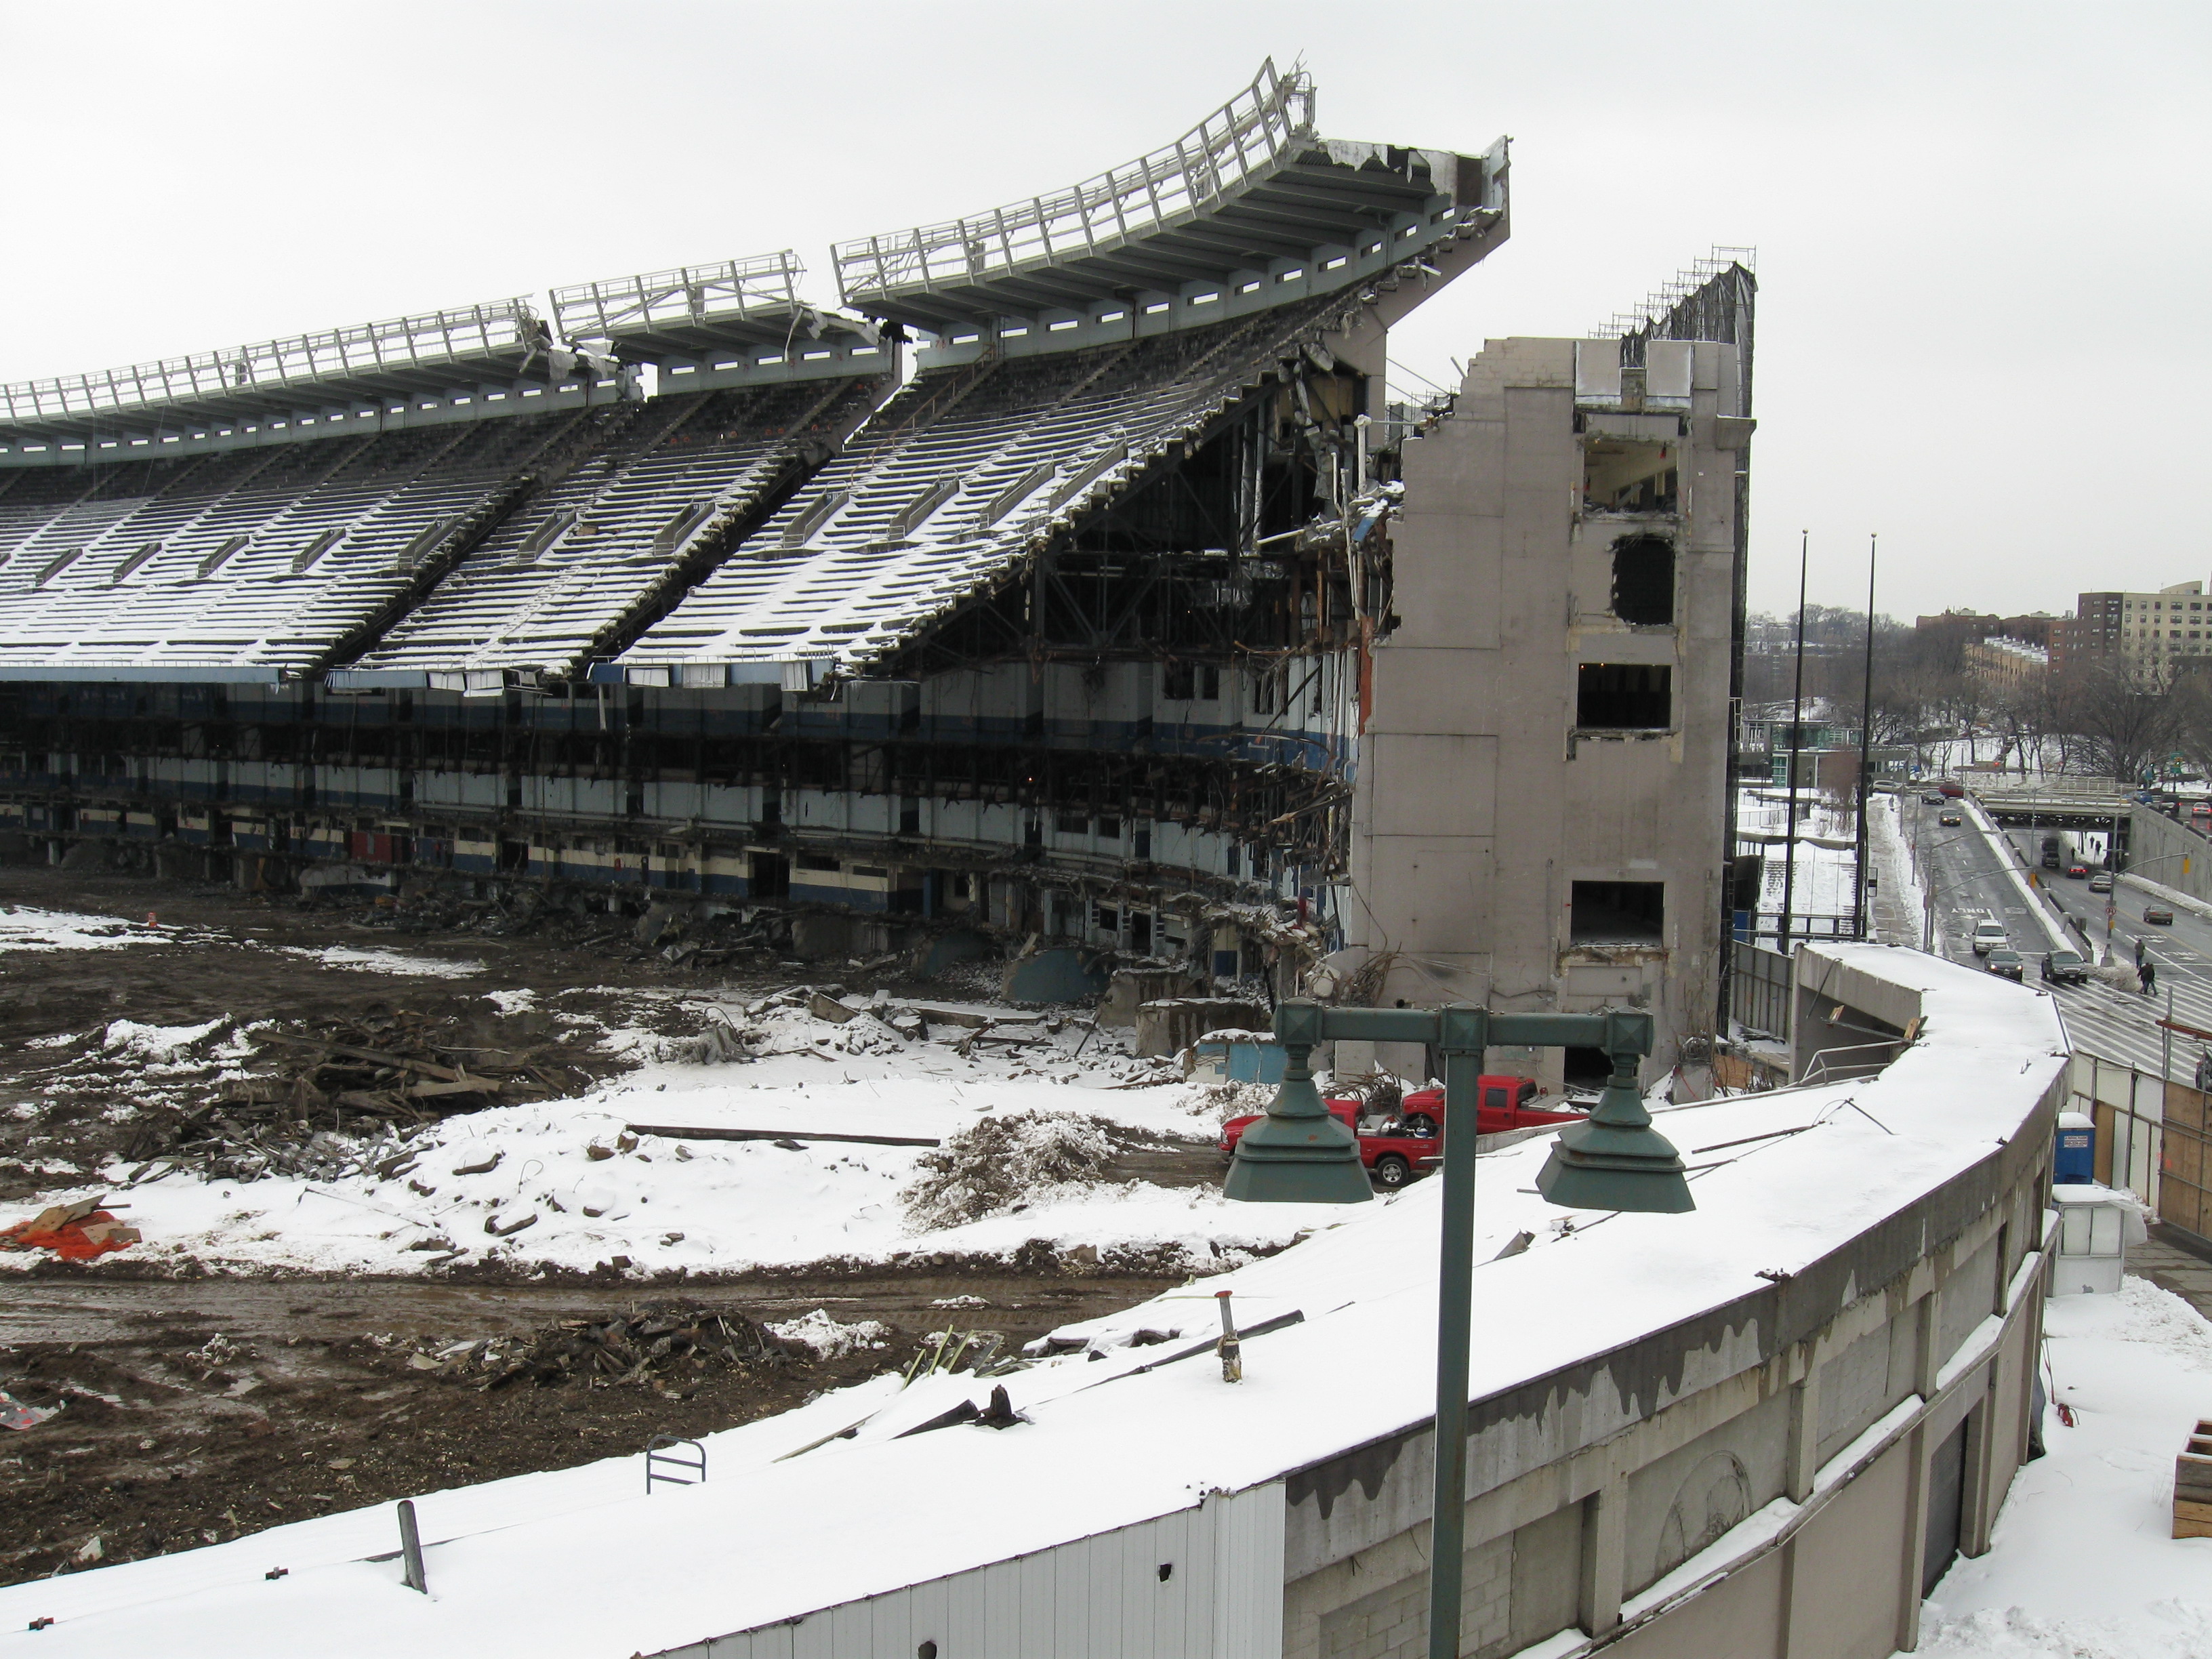 File:Yankee Stadium demolition.JPG - Wikipedia